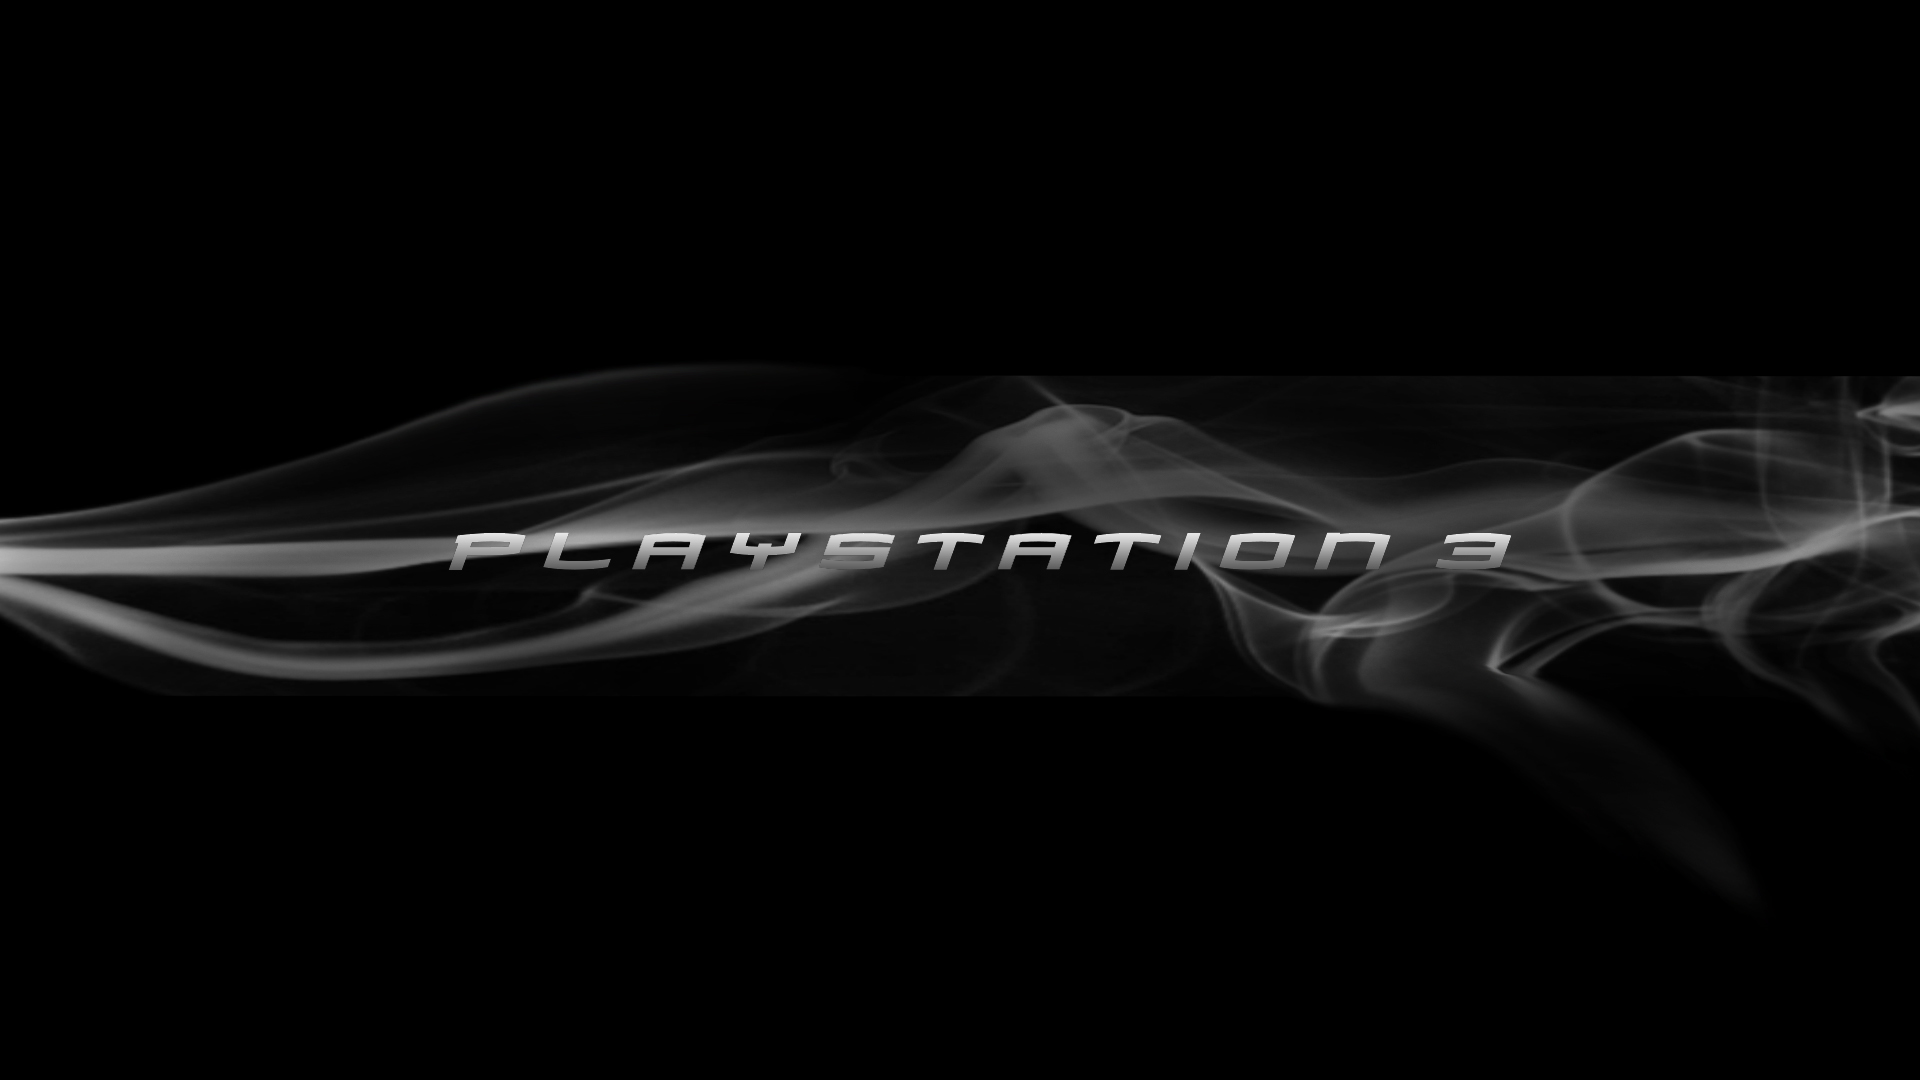 playstation 3 smoke logo